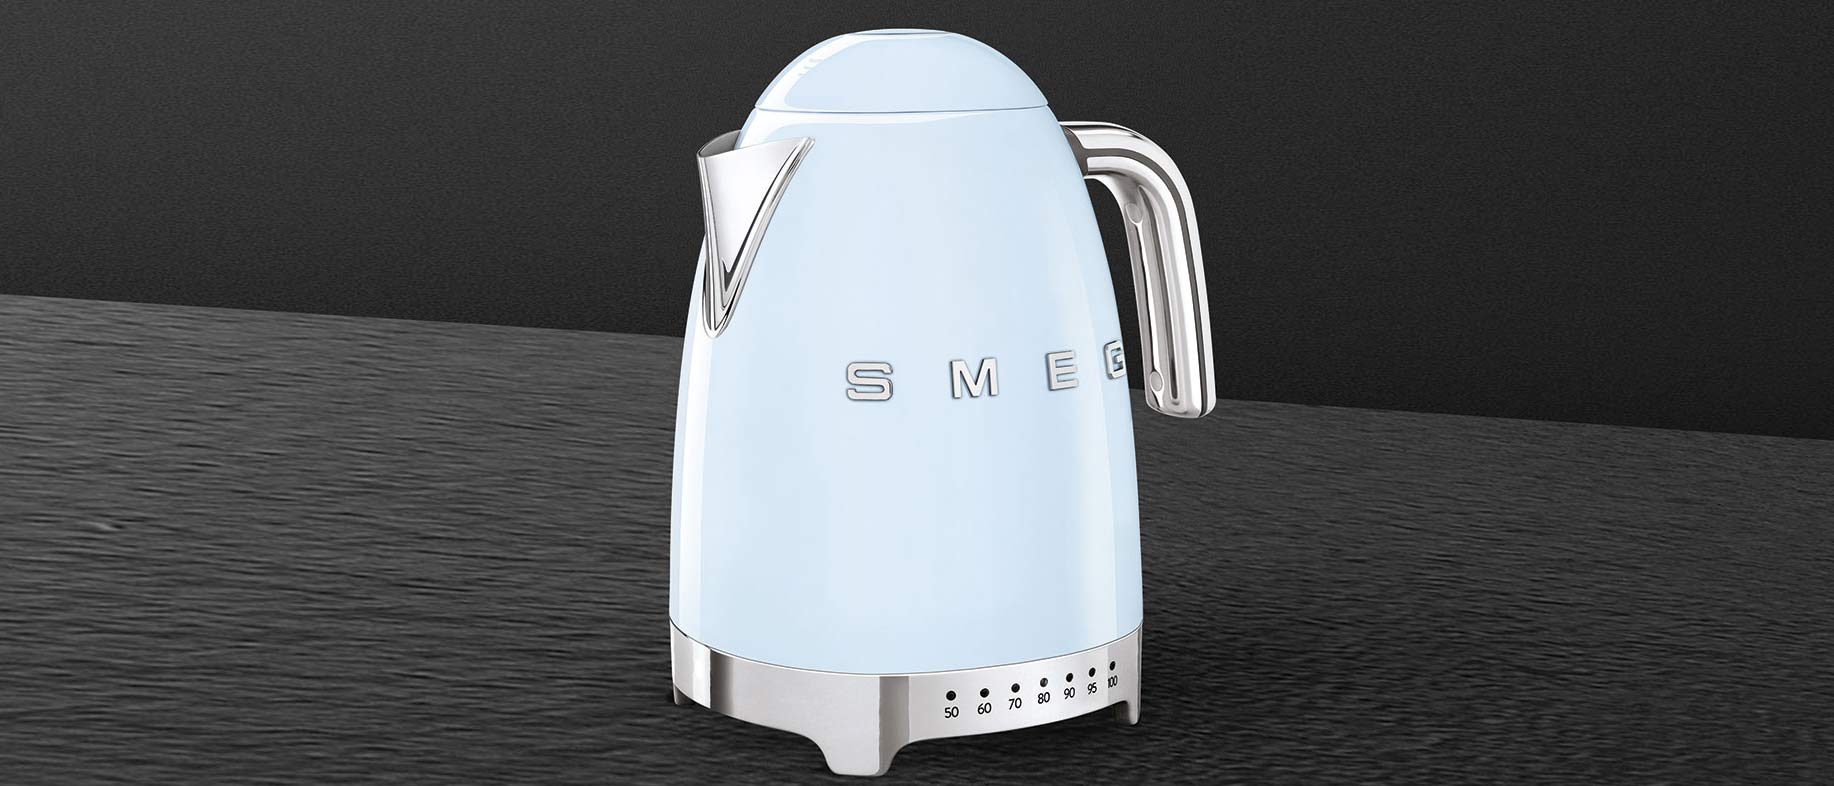 SMEG Mini Electric Water Kettle